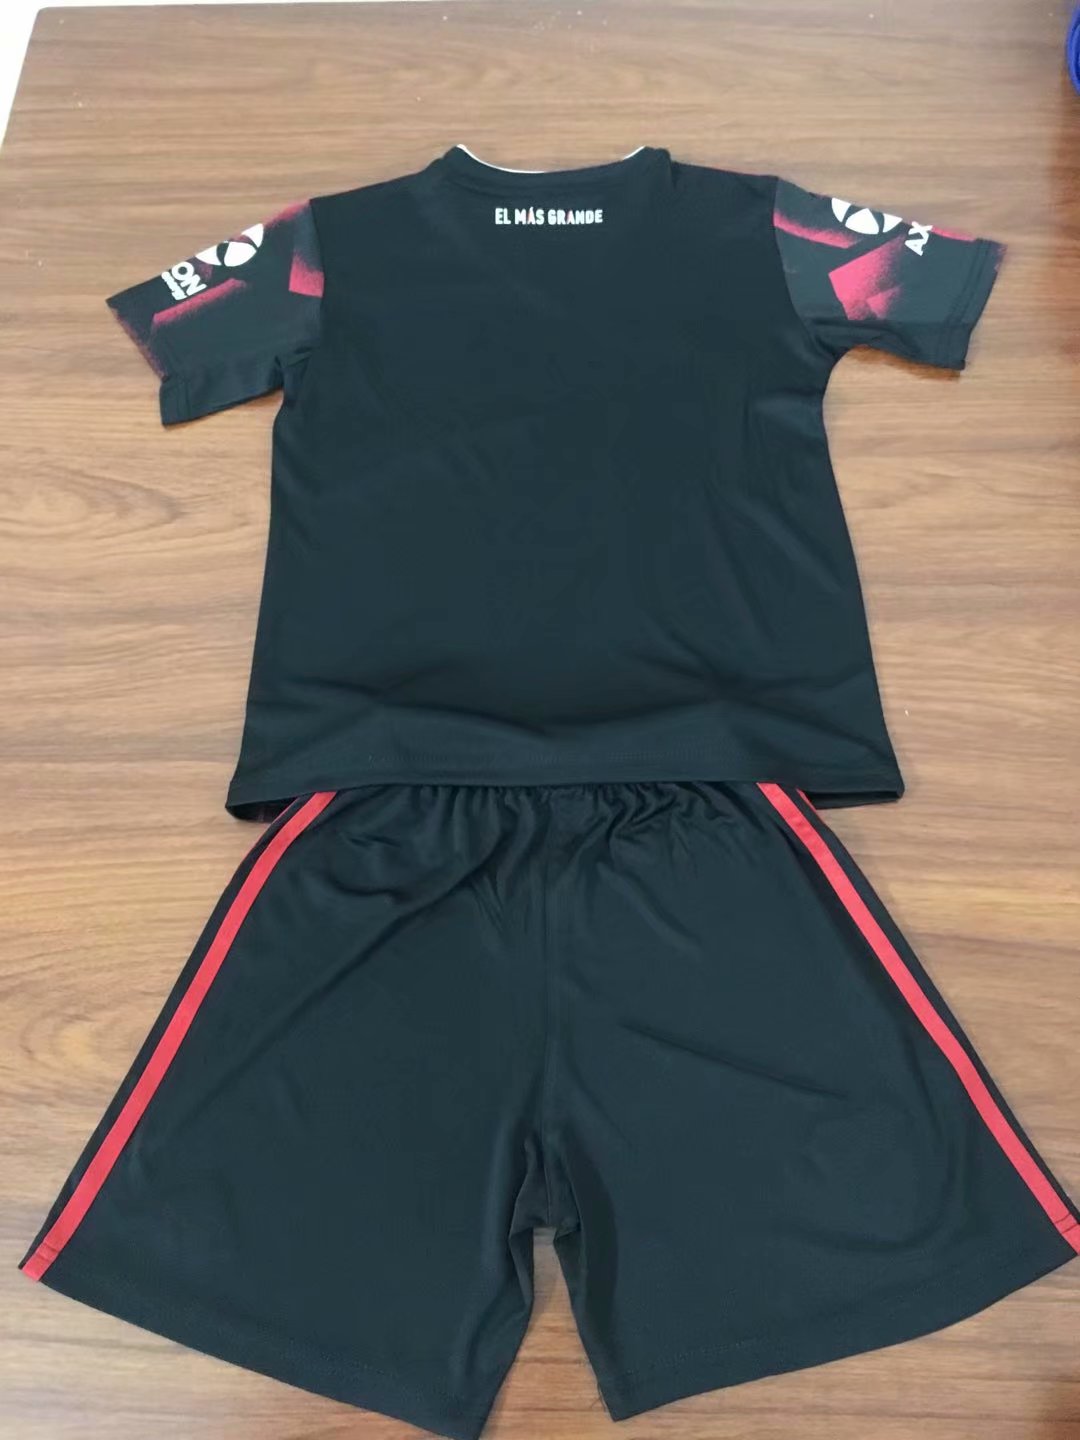 Kids River Plate Home 2019-20 Soccer Kits(Shirt+Shorts) - Click Image to Close